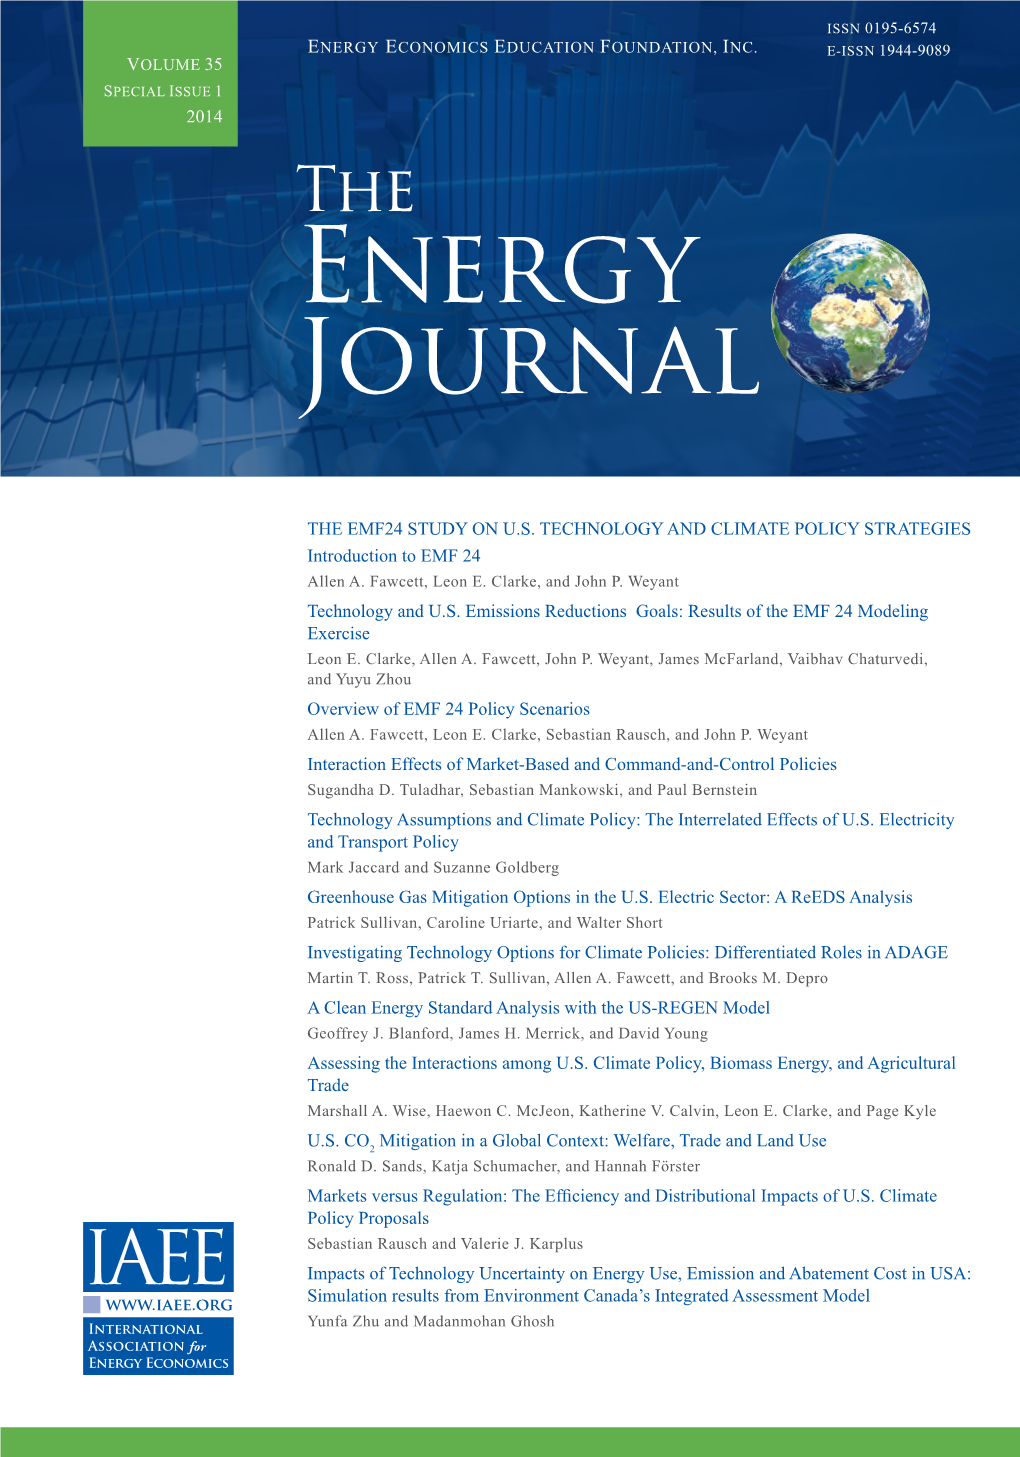 Energy Journal